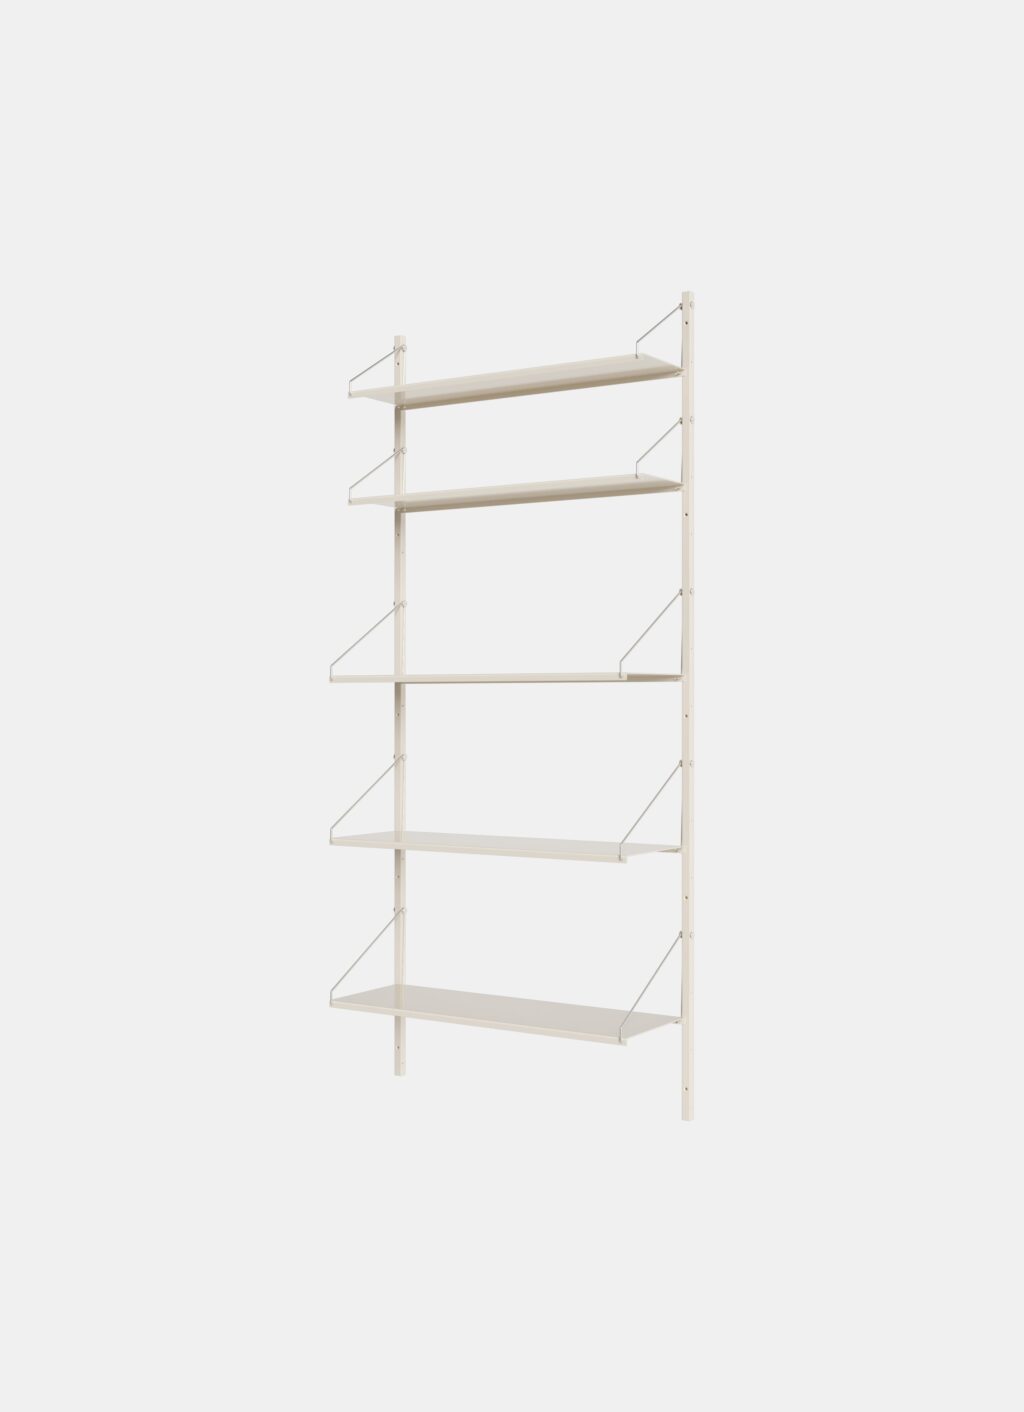 Frama - Shelf Library - Warm White Steel - H1852/W80 - Single Section